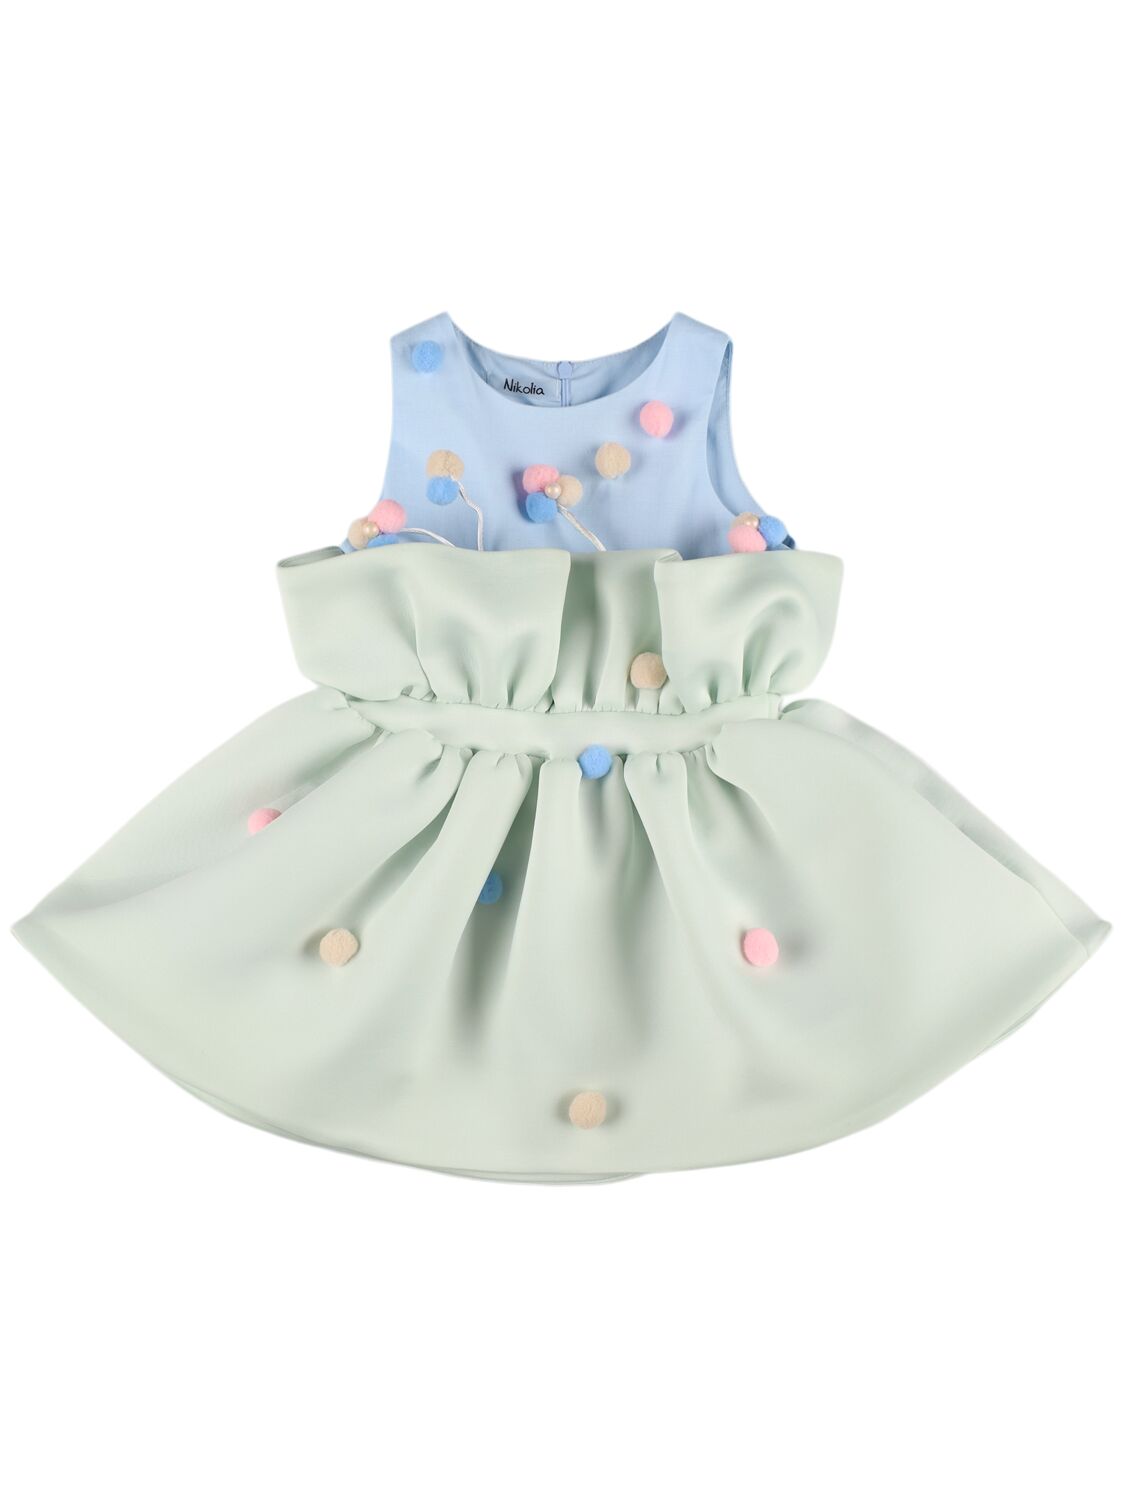 Nikolia Kids' Neoprene Dress W/ Appliqués In Multi